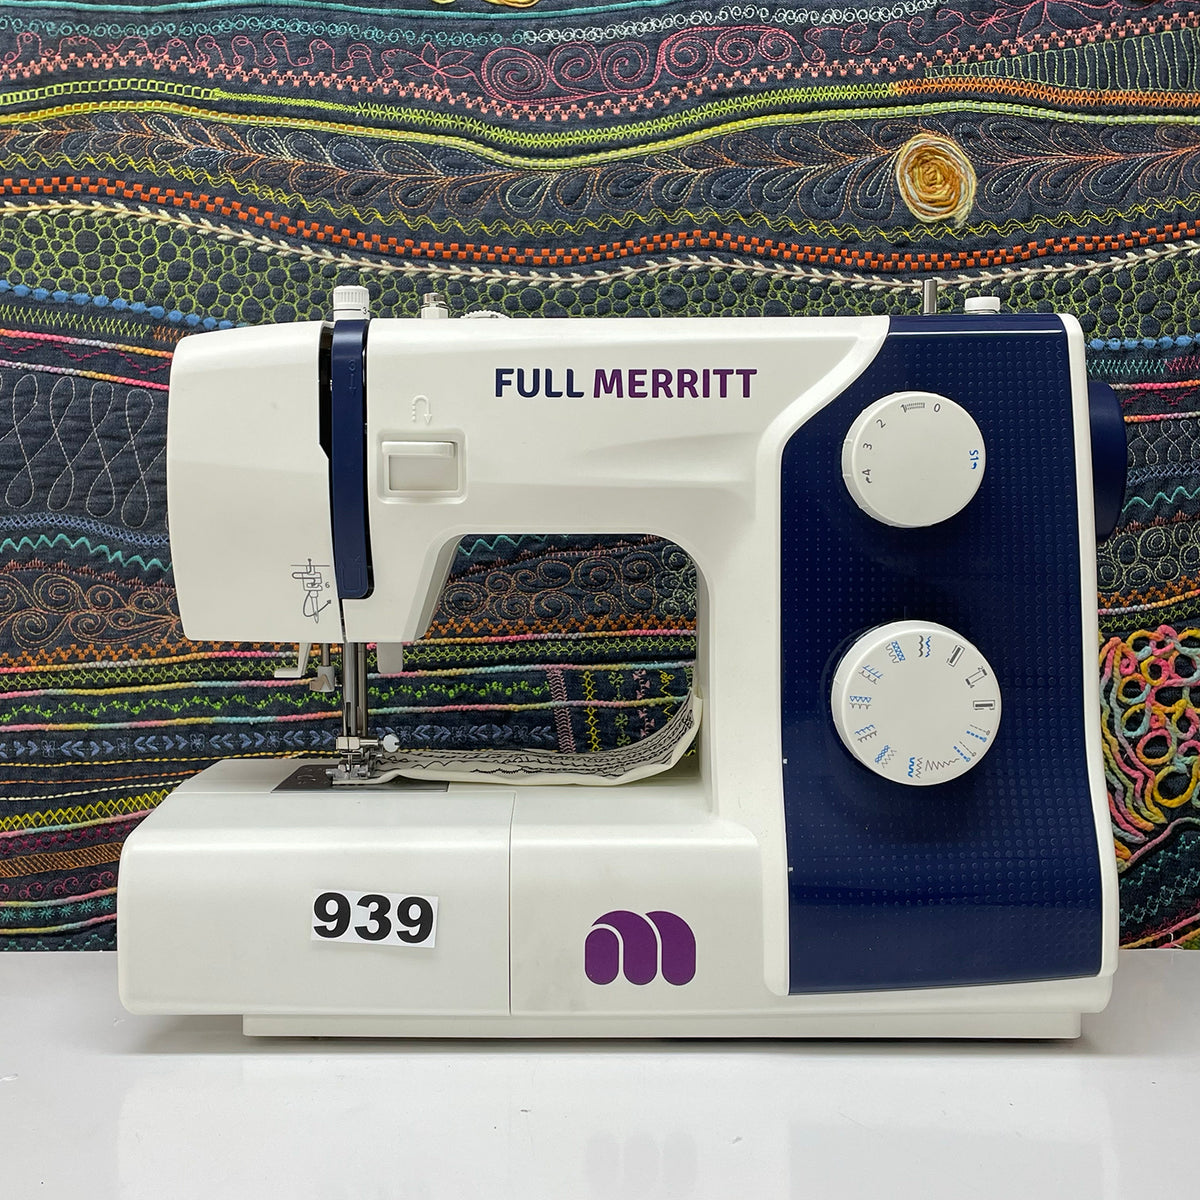 Máquina de coser Merritt ME 3B Full Merritt 4x4 desde Seda Hasta Cuero (Segunda Selección N939)